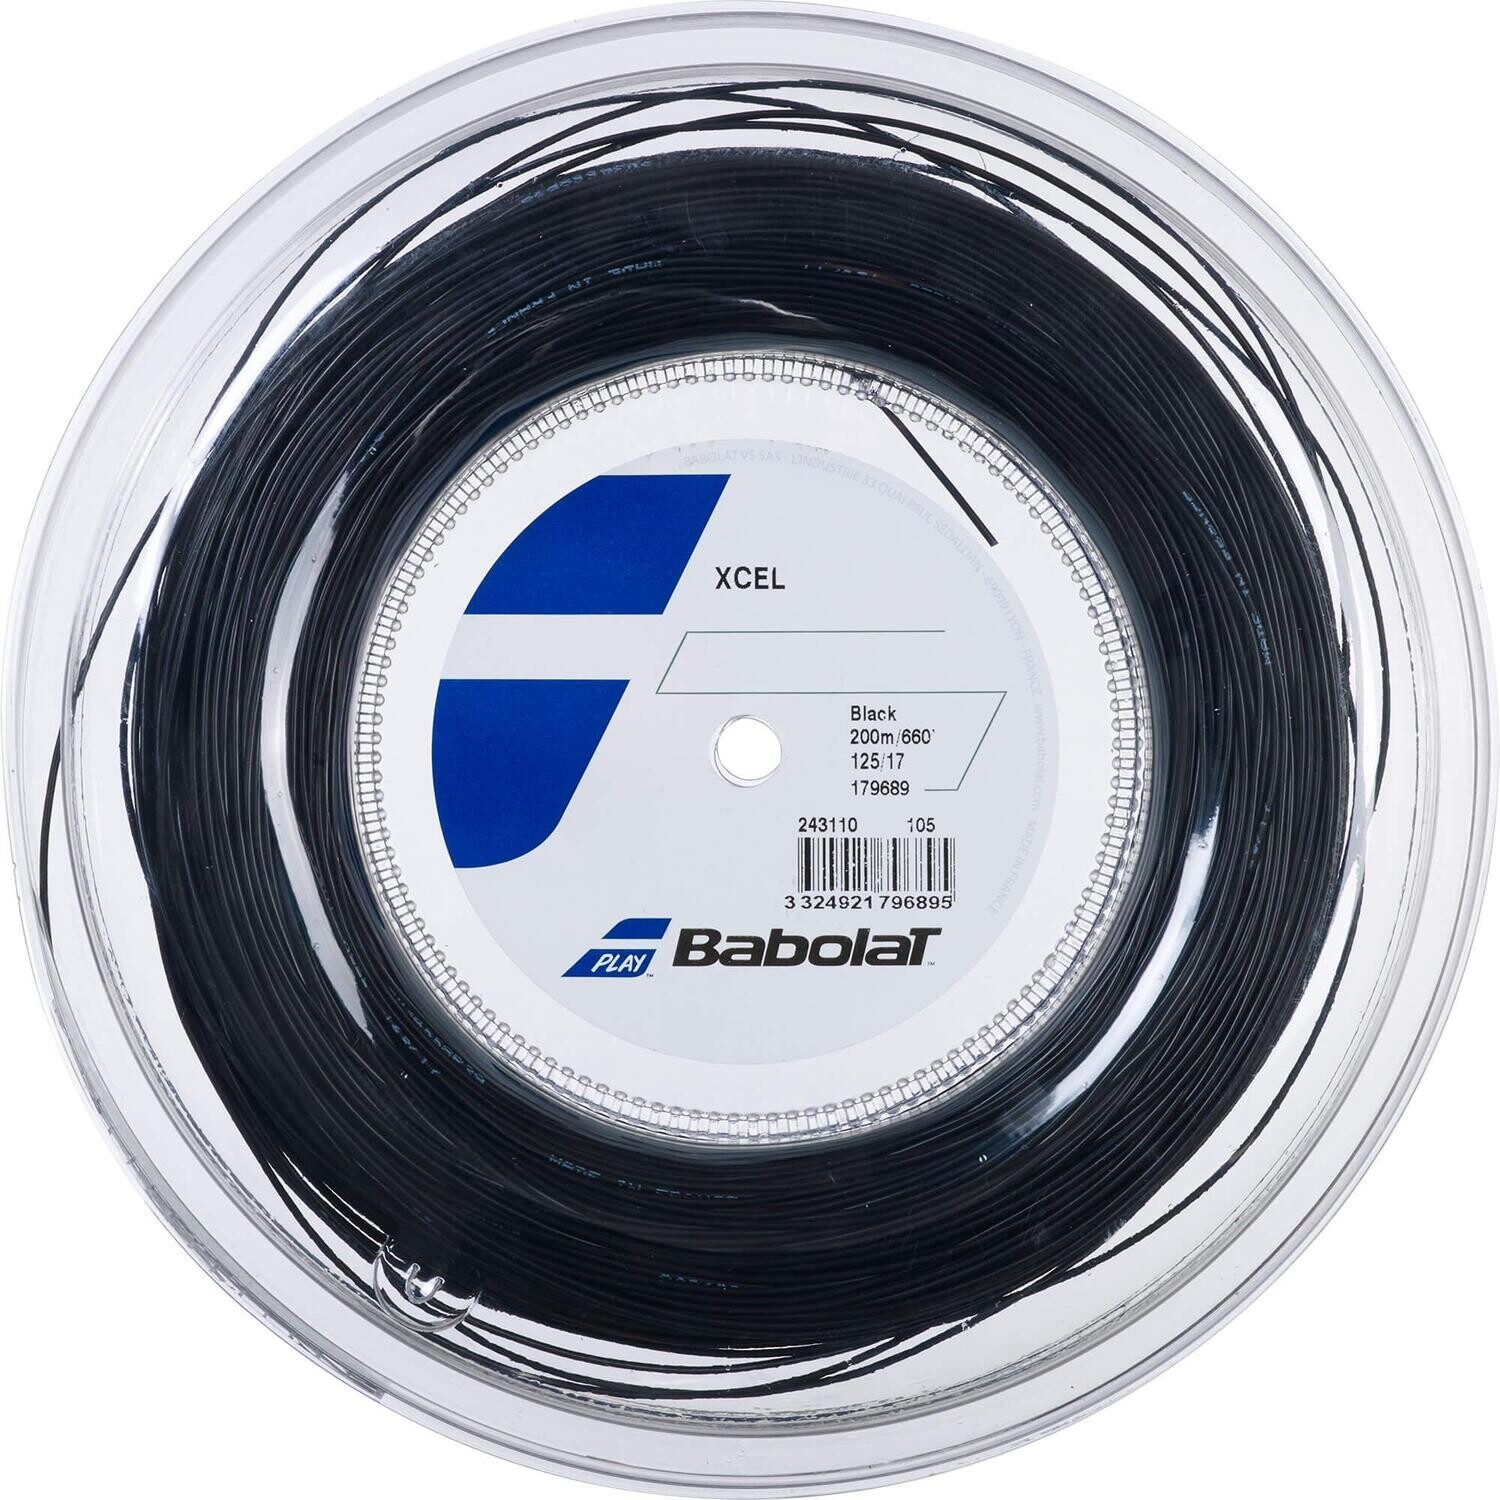 Babolat XCEL Tennis String 1.25mm - 200m Reel Black